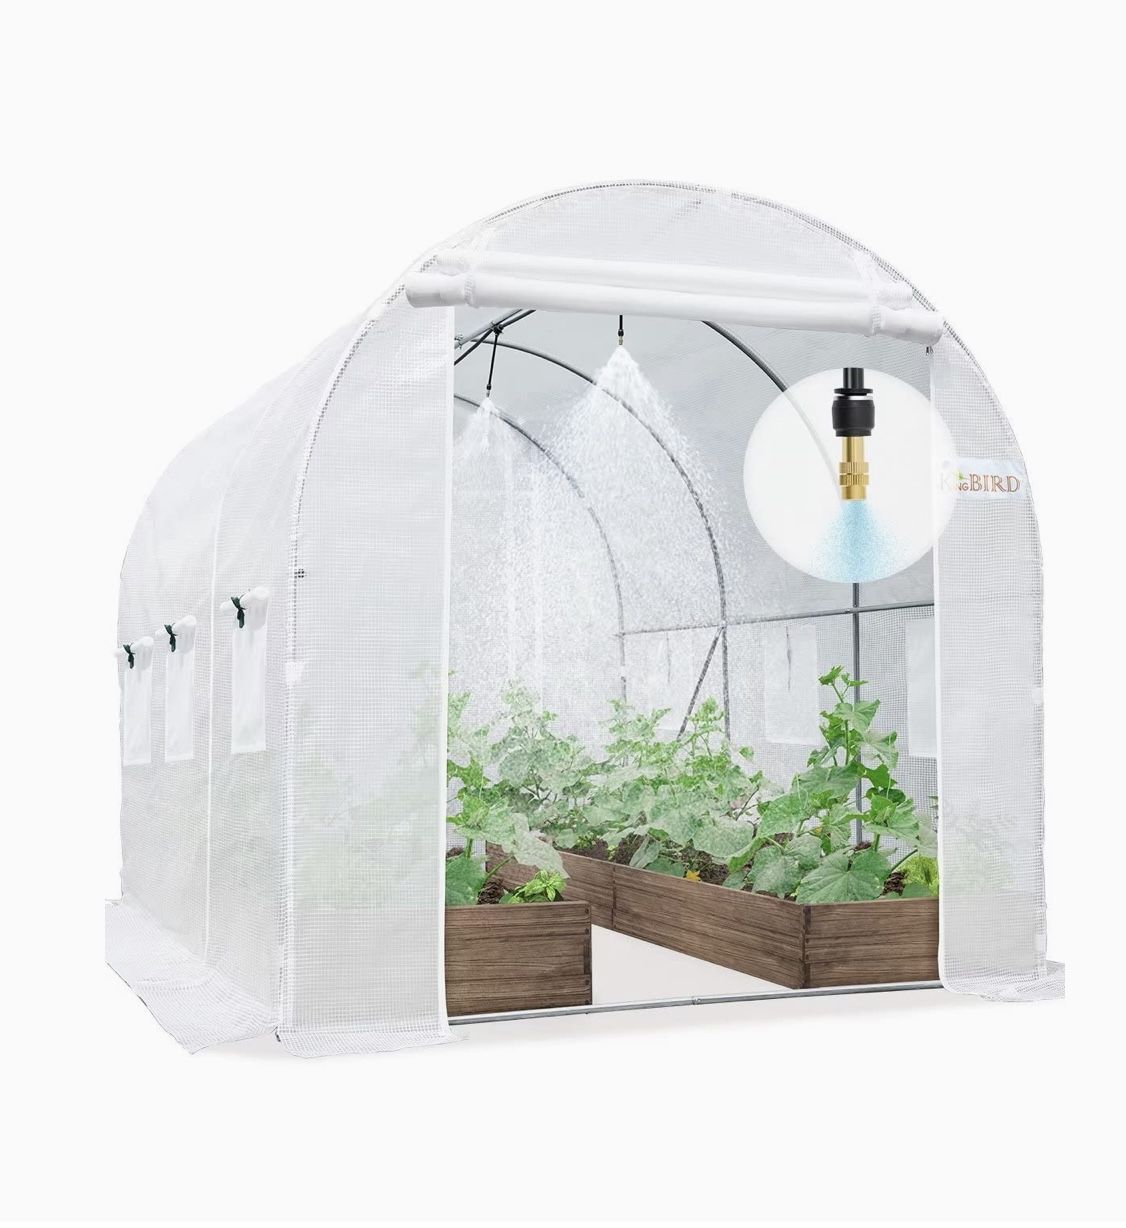 Greenhouse  10x6.6